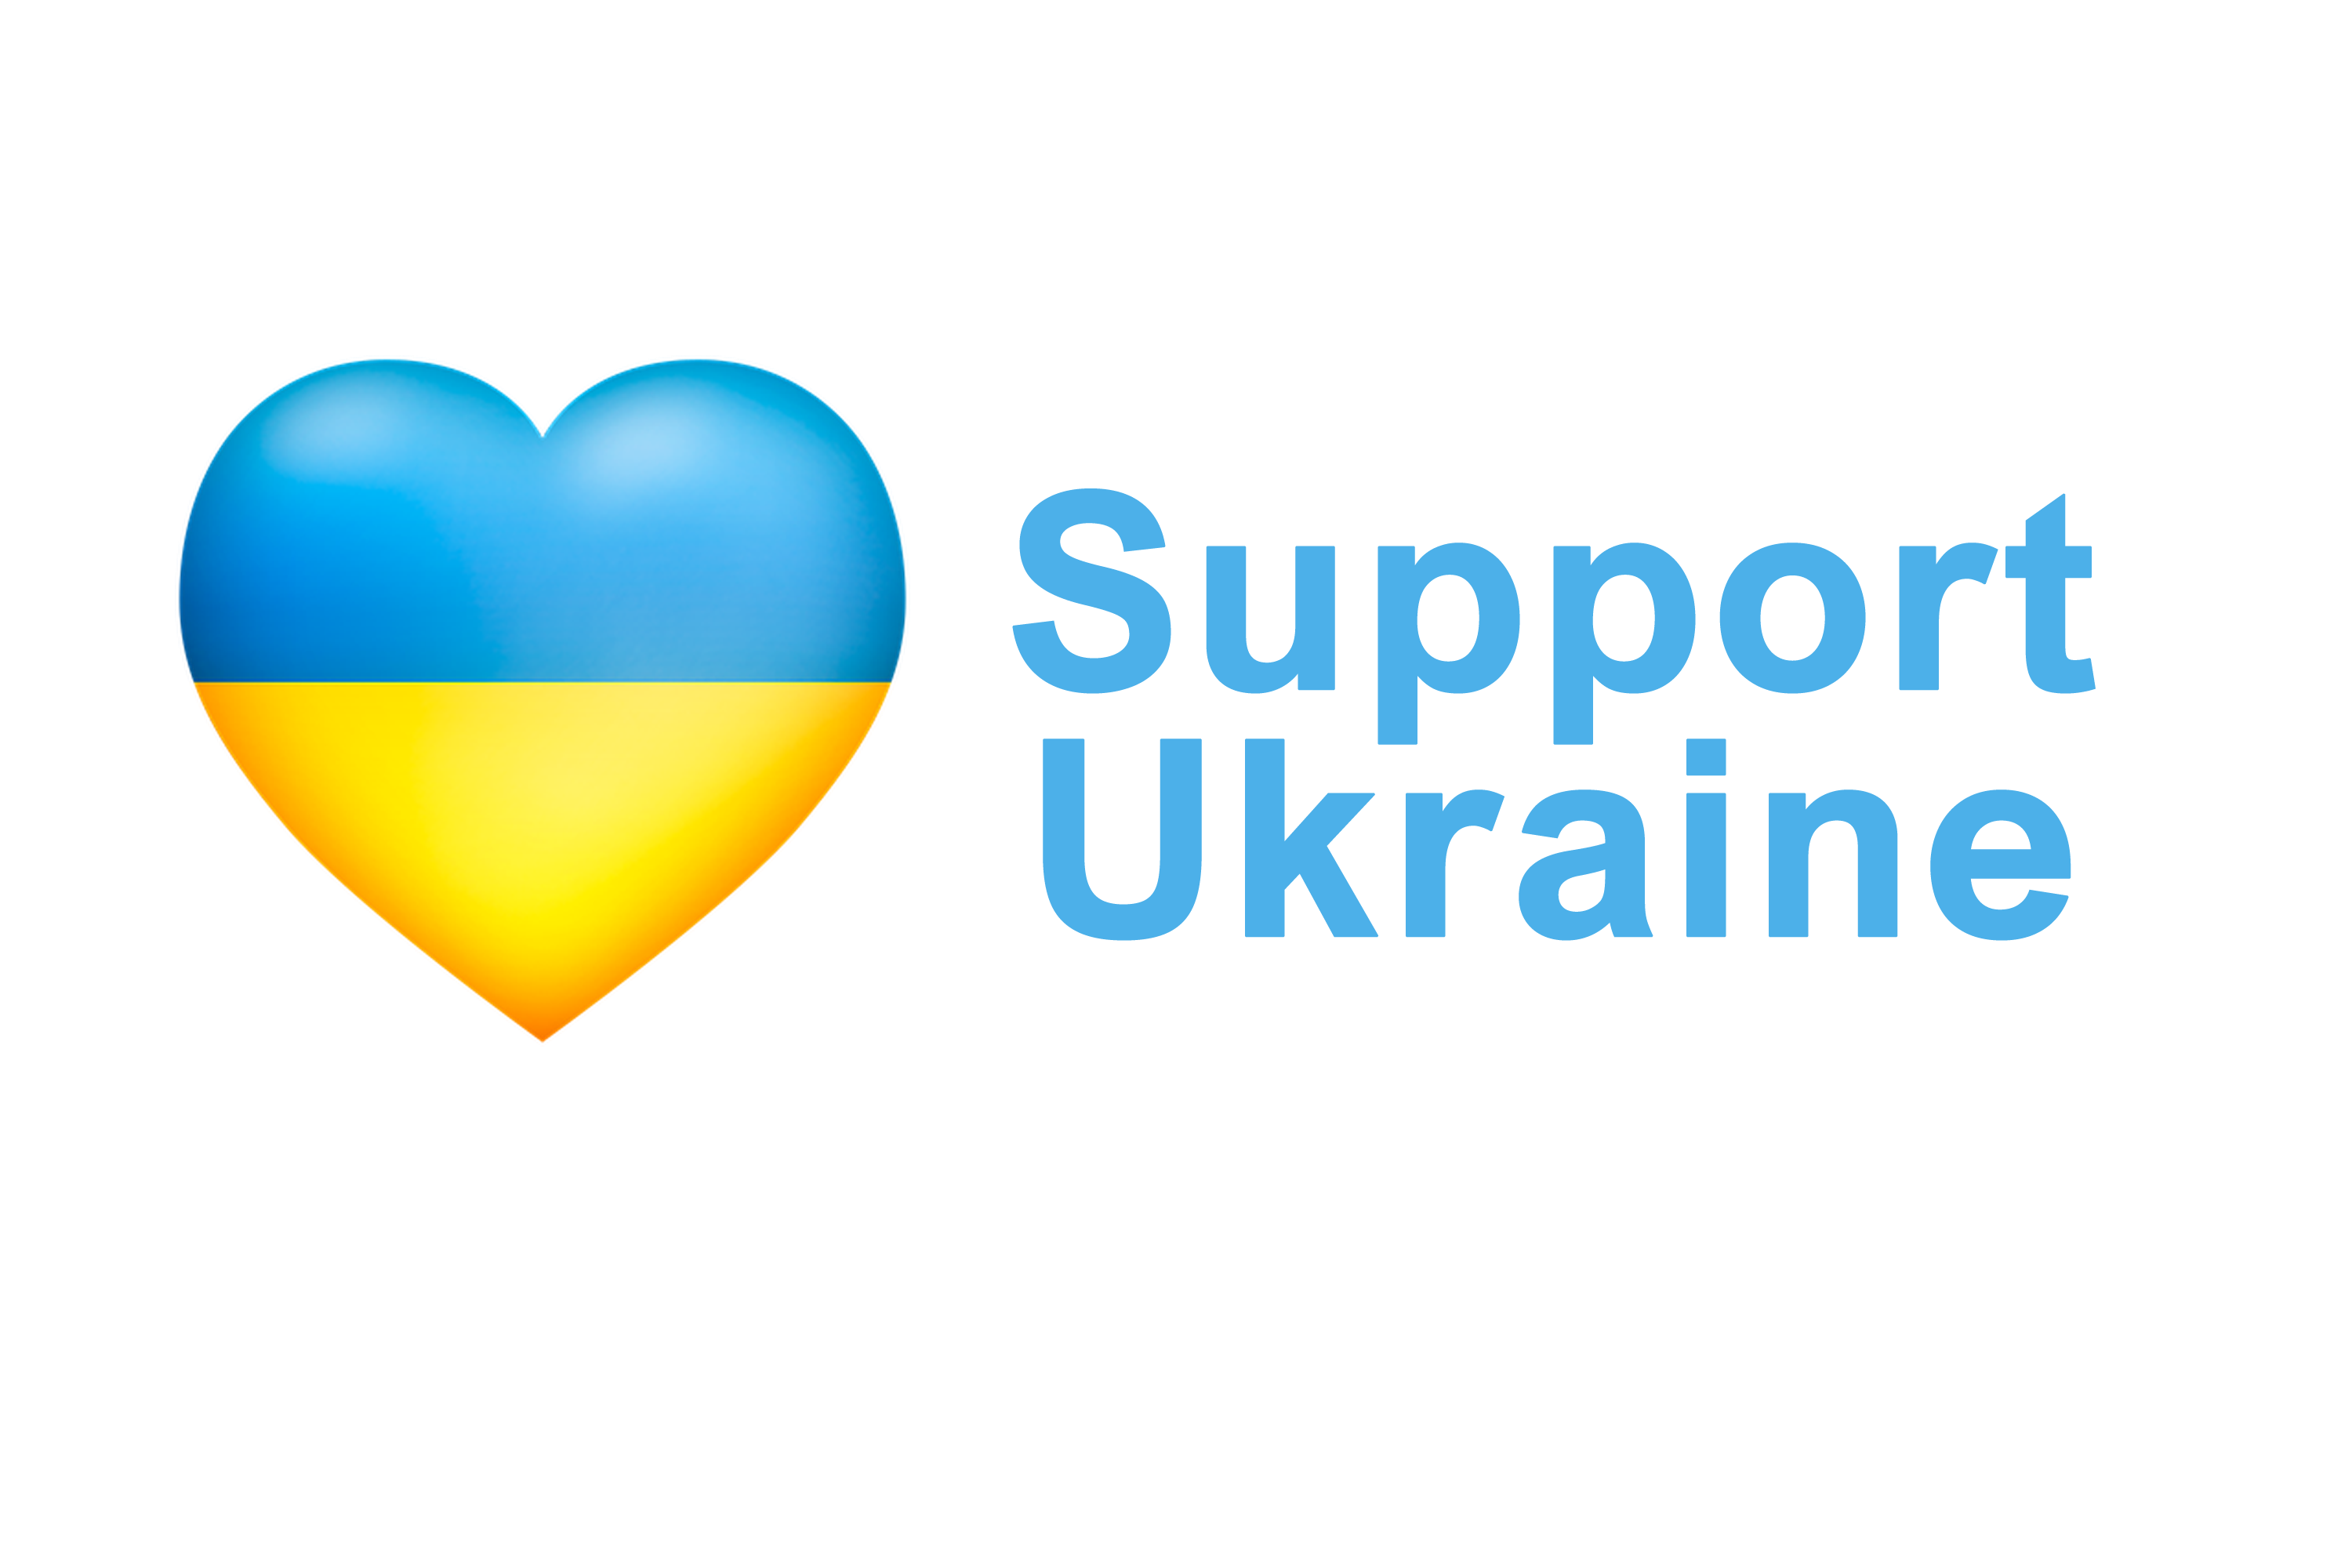 Support Ukraine PNG